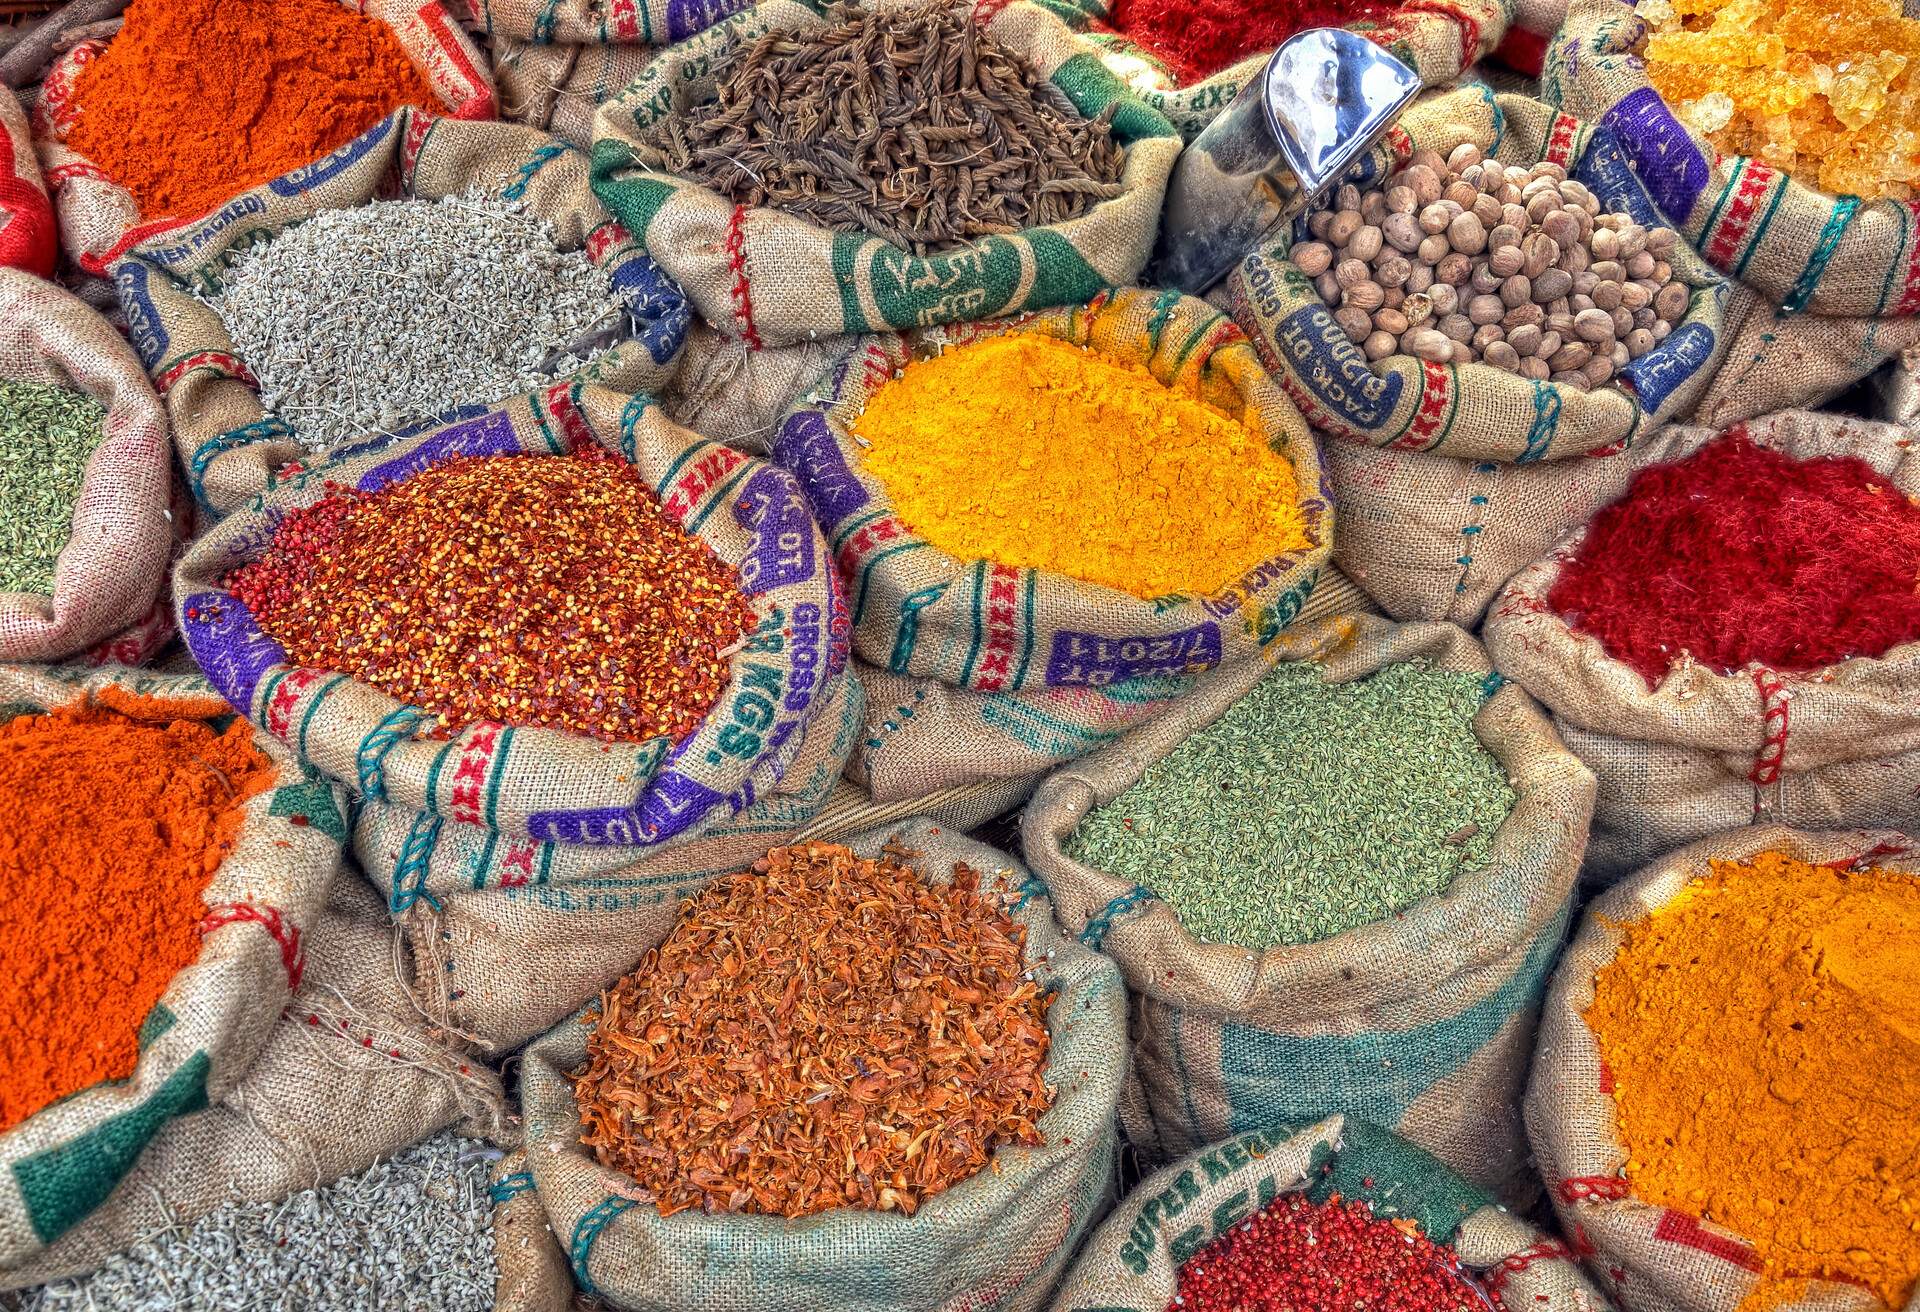 Arabian Spices at traditional arabian market